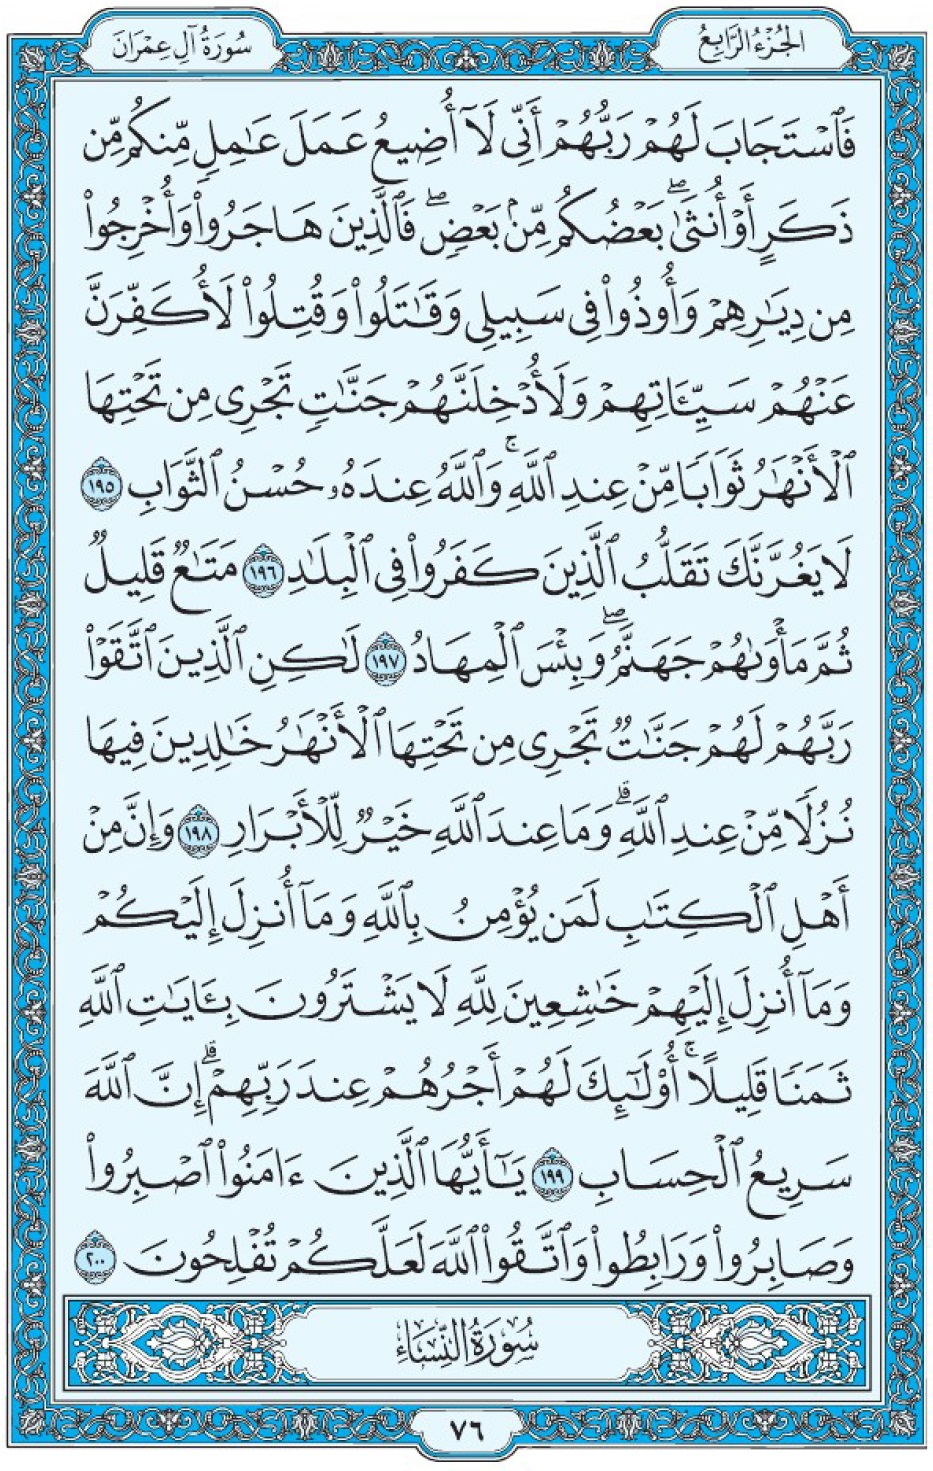 Коран Мединский мусхаф страница 76, Али Имран, аят 195-200